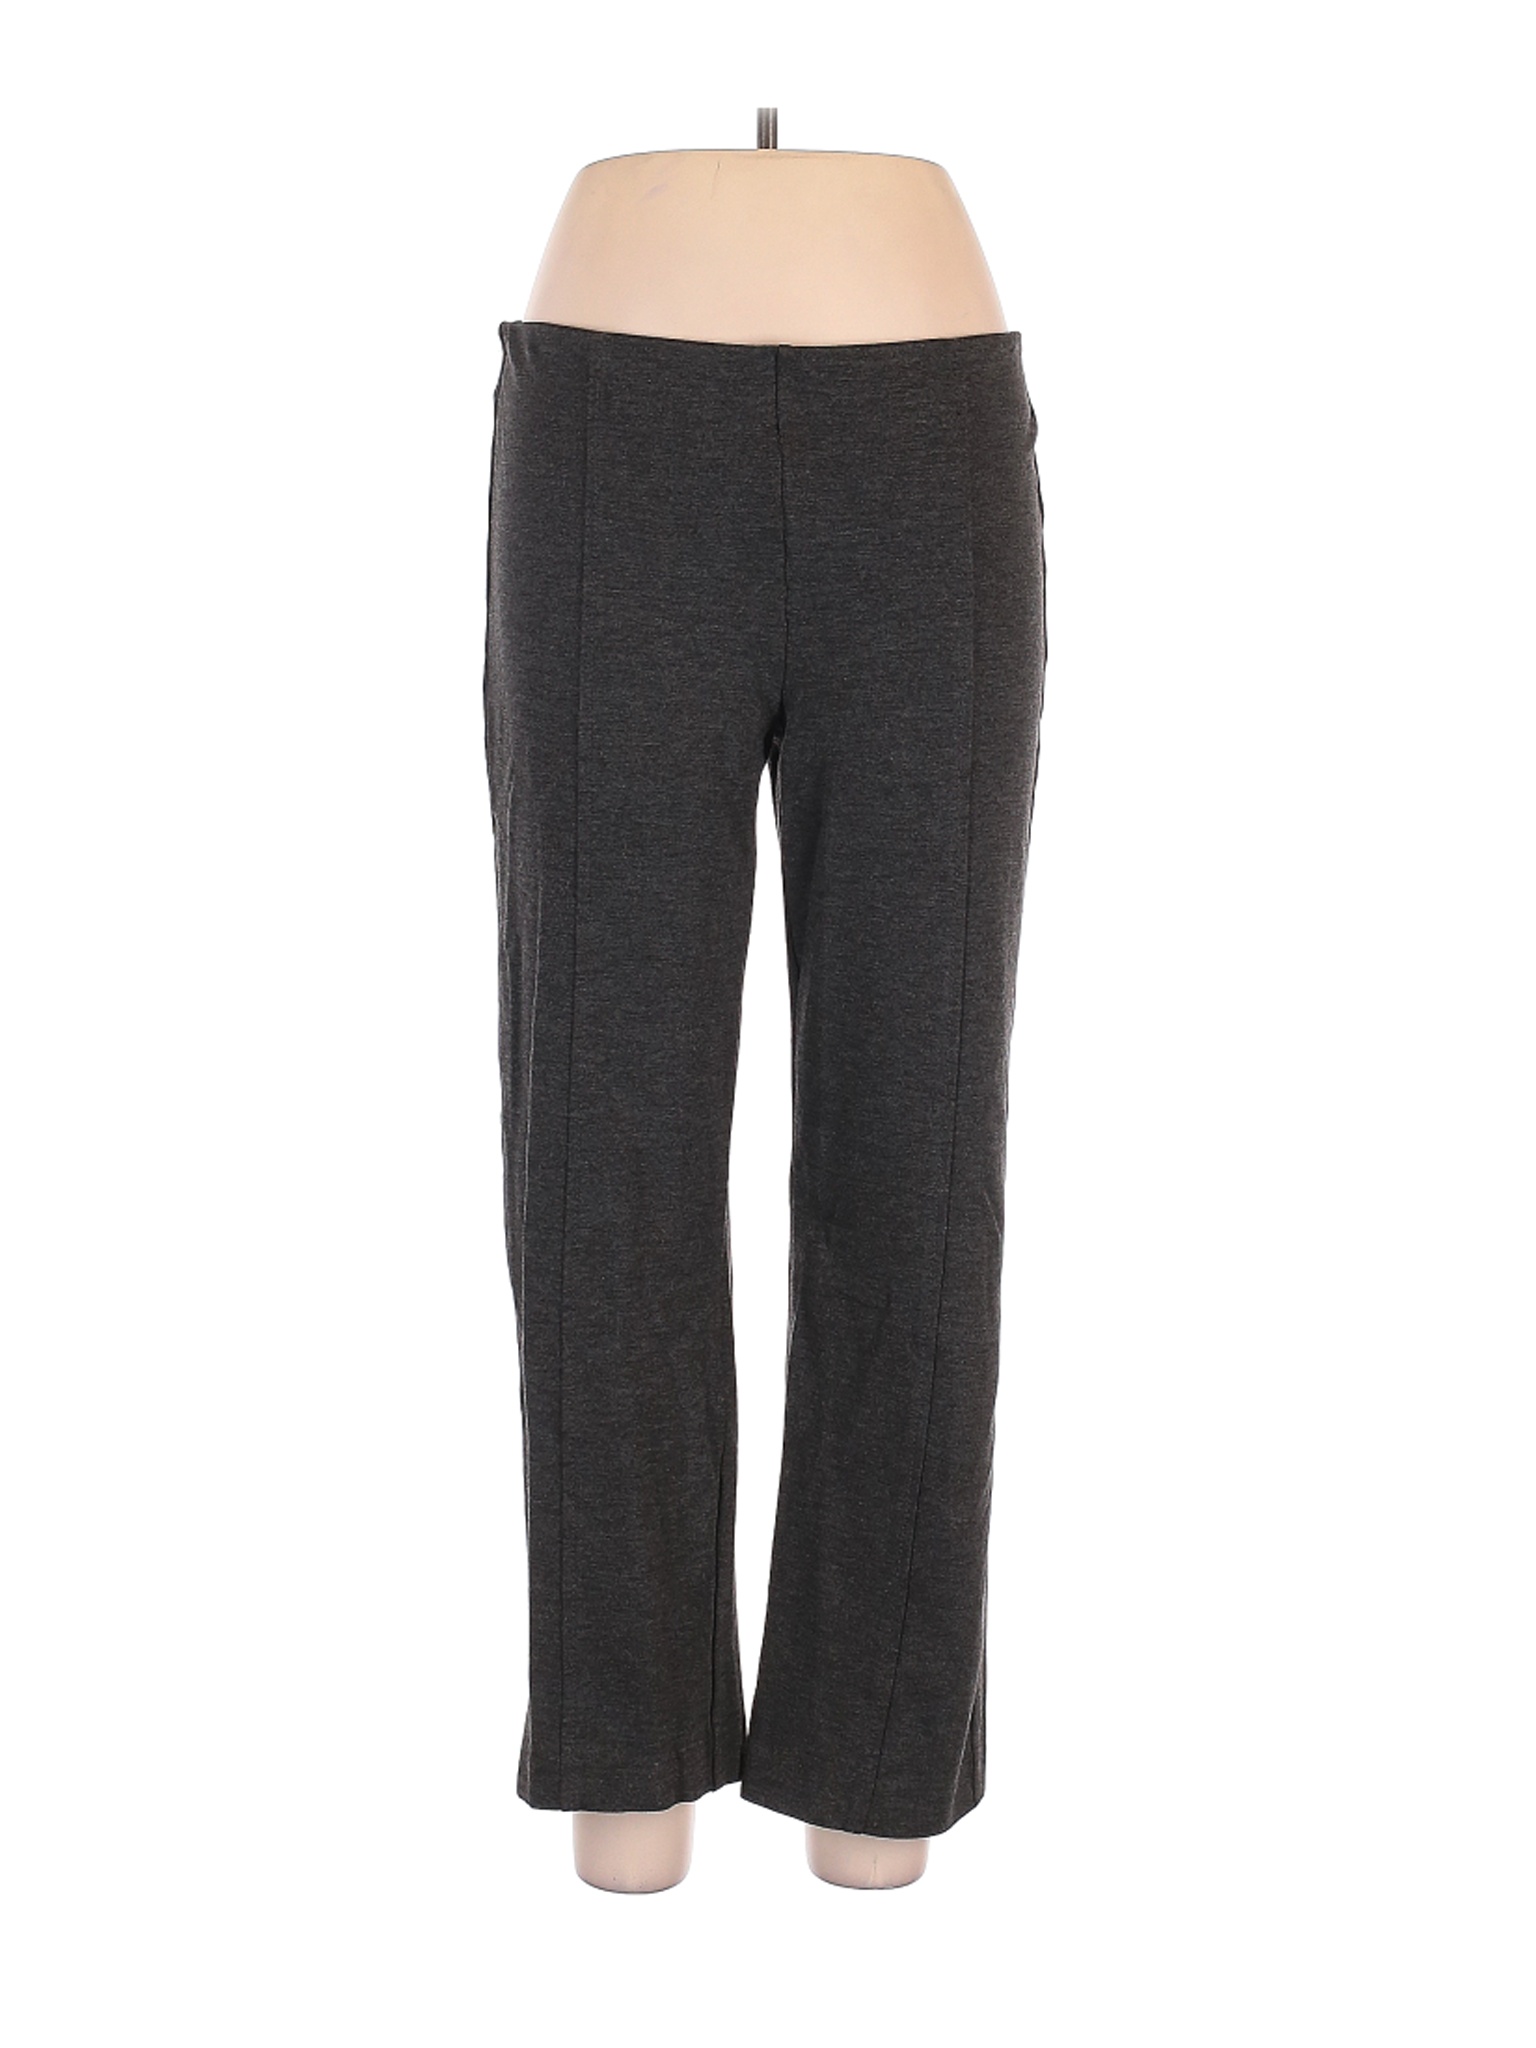 Gloria Vanderbilt Women Black Casual Pants 12 | eBay